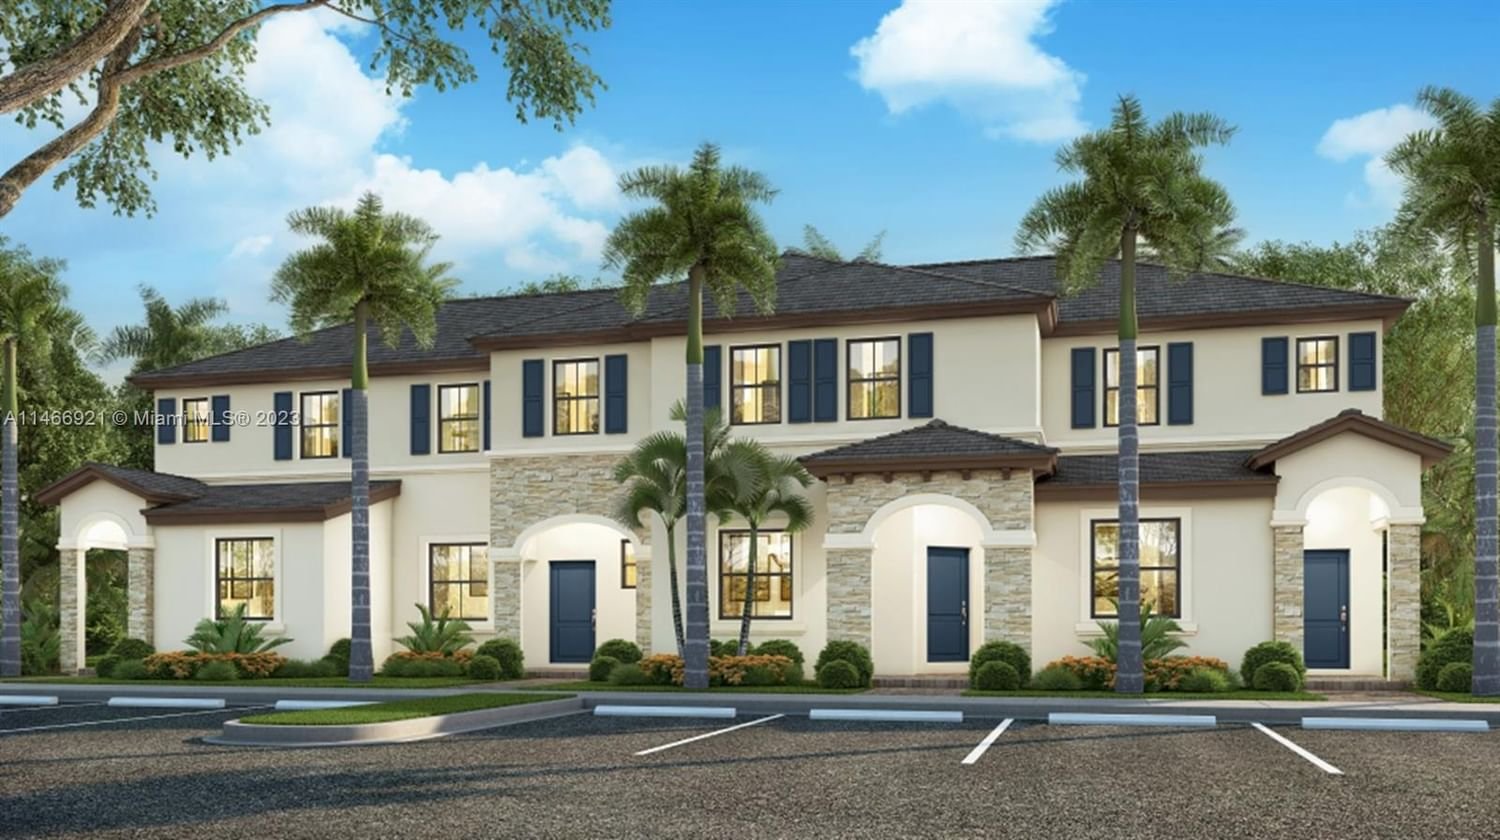 Real estate property located at 23426 127 Pl, Miami-Dade County, Miami, FL